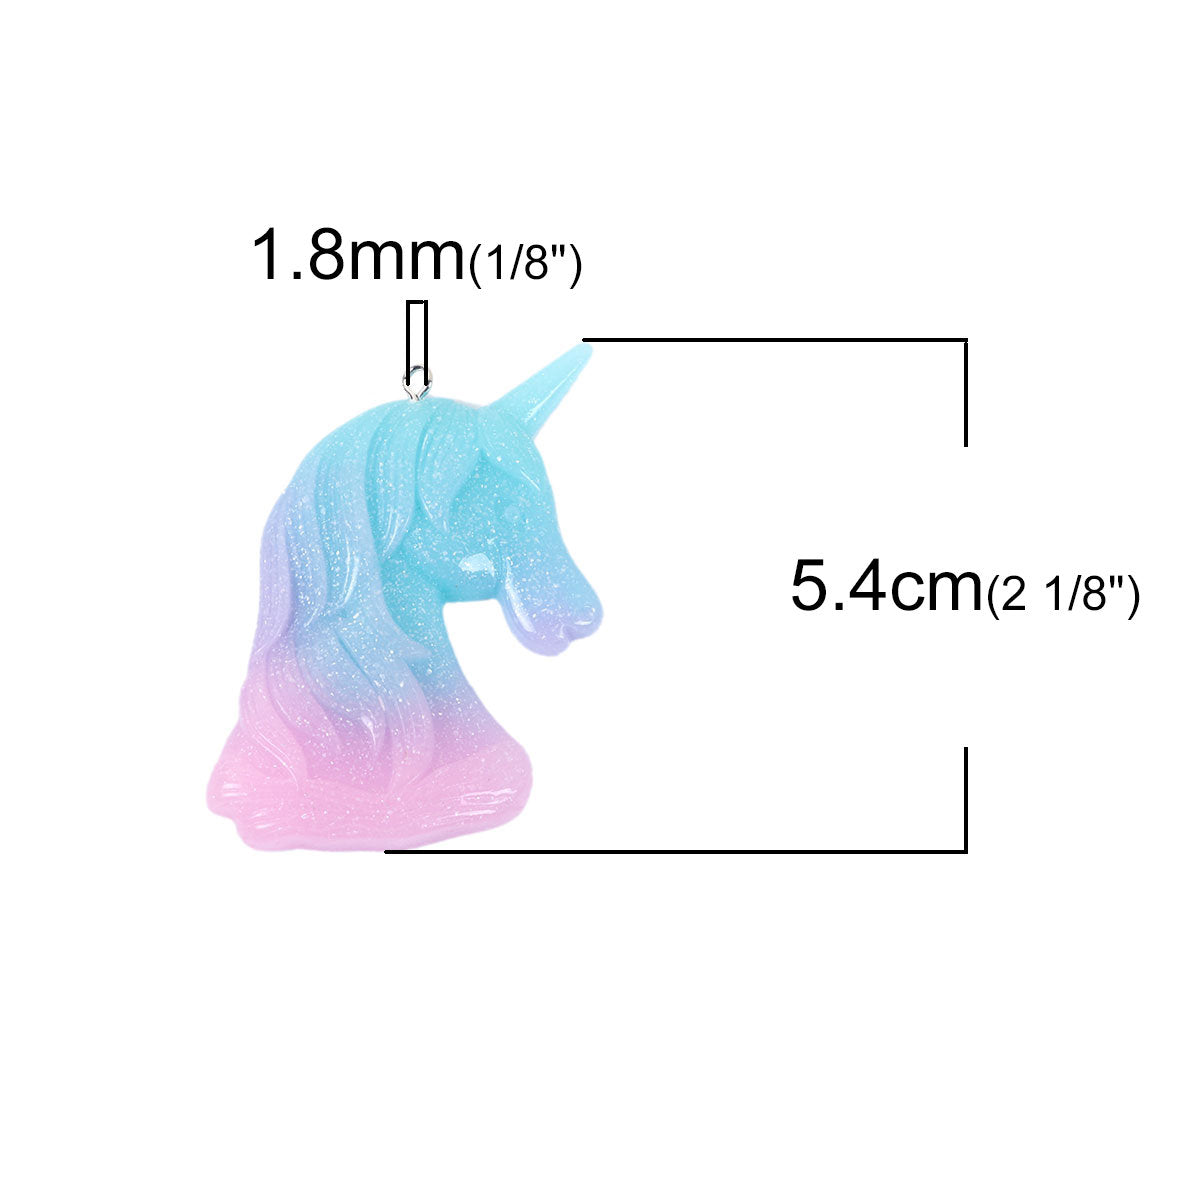 Glitter unicorn charm, resin unicorn pendant, pink purple and aqua shades